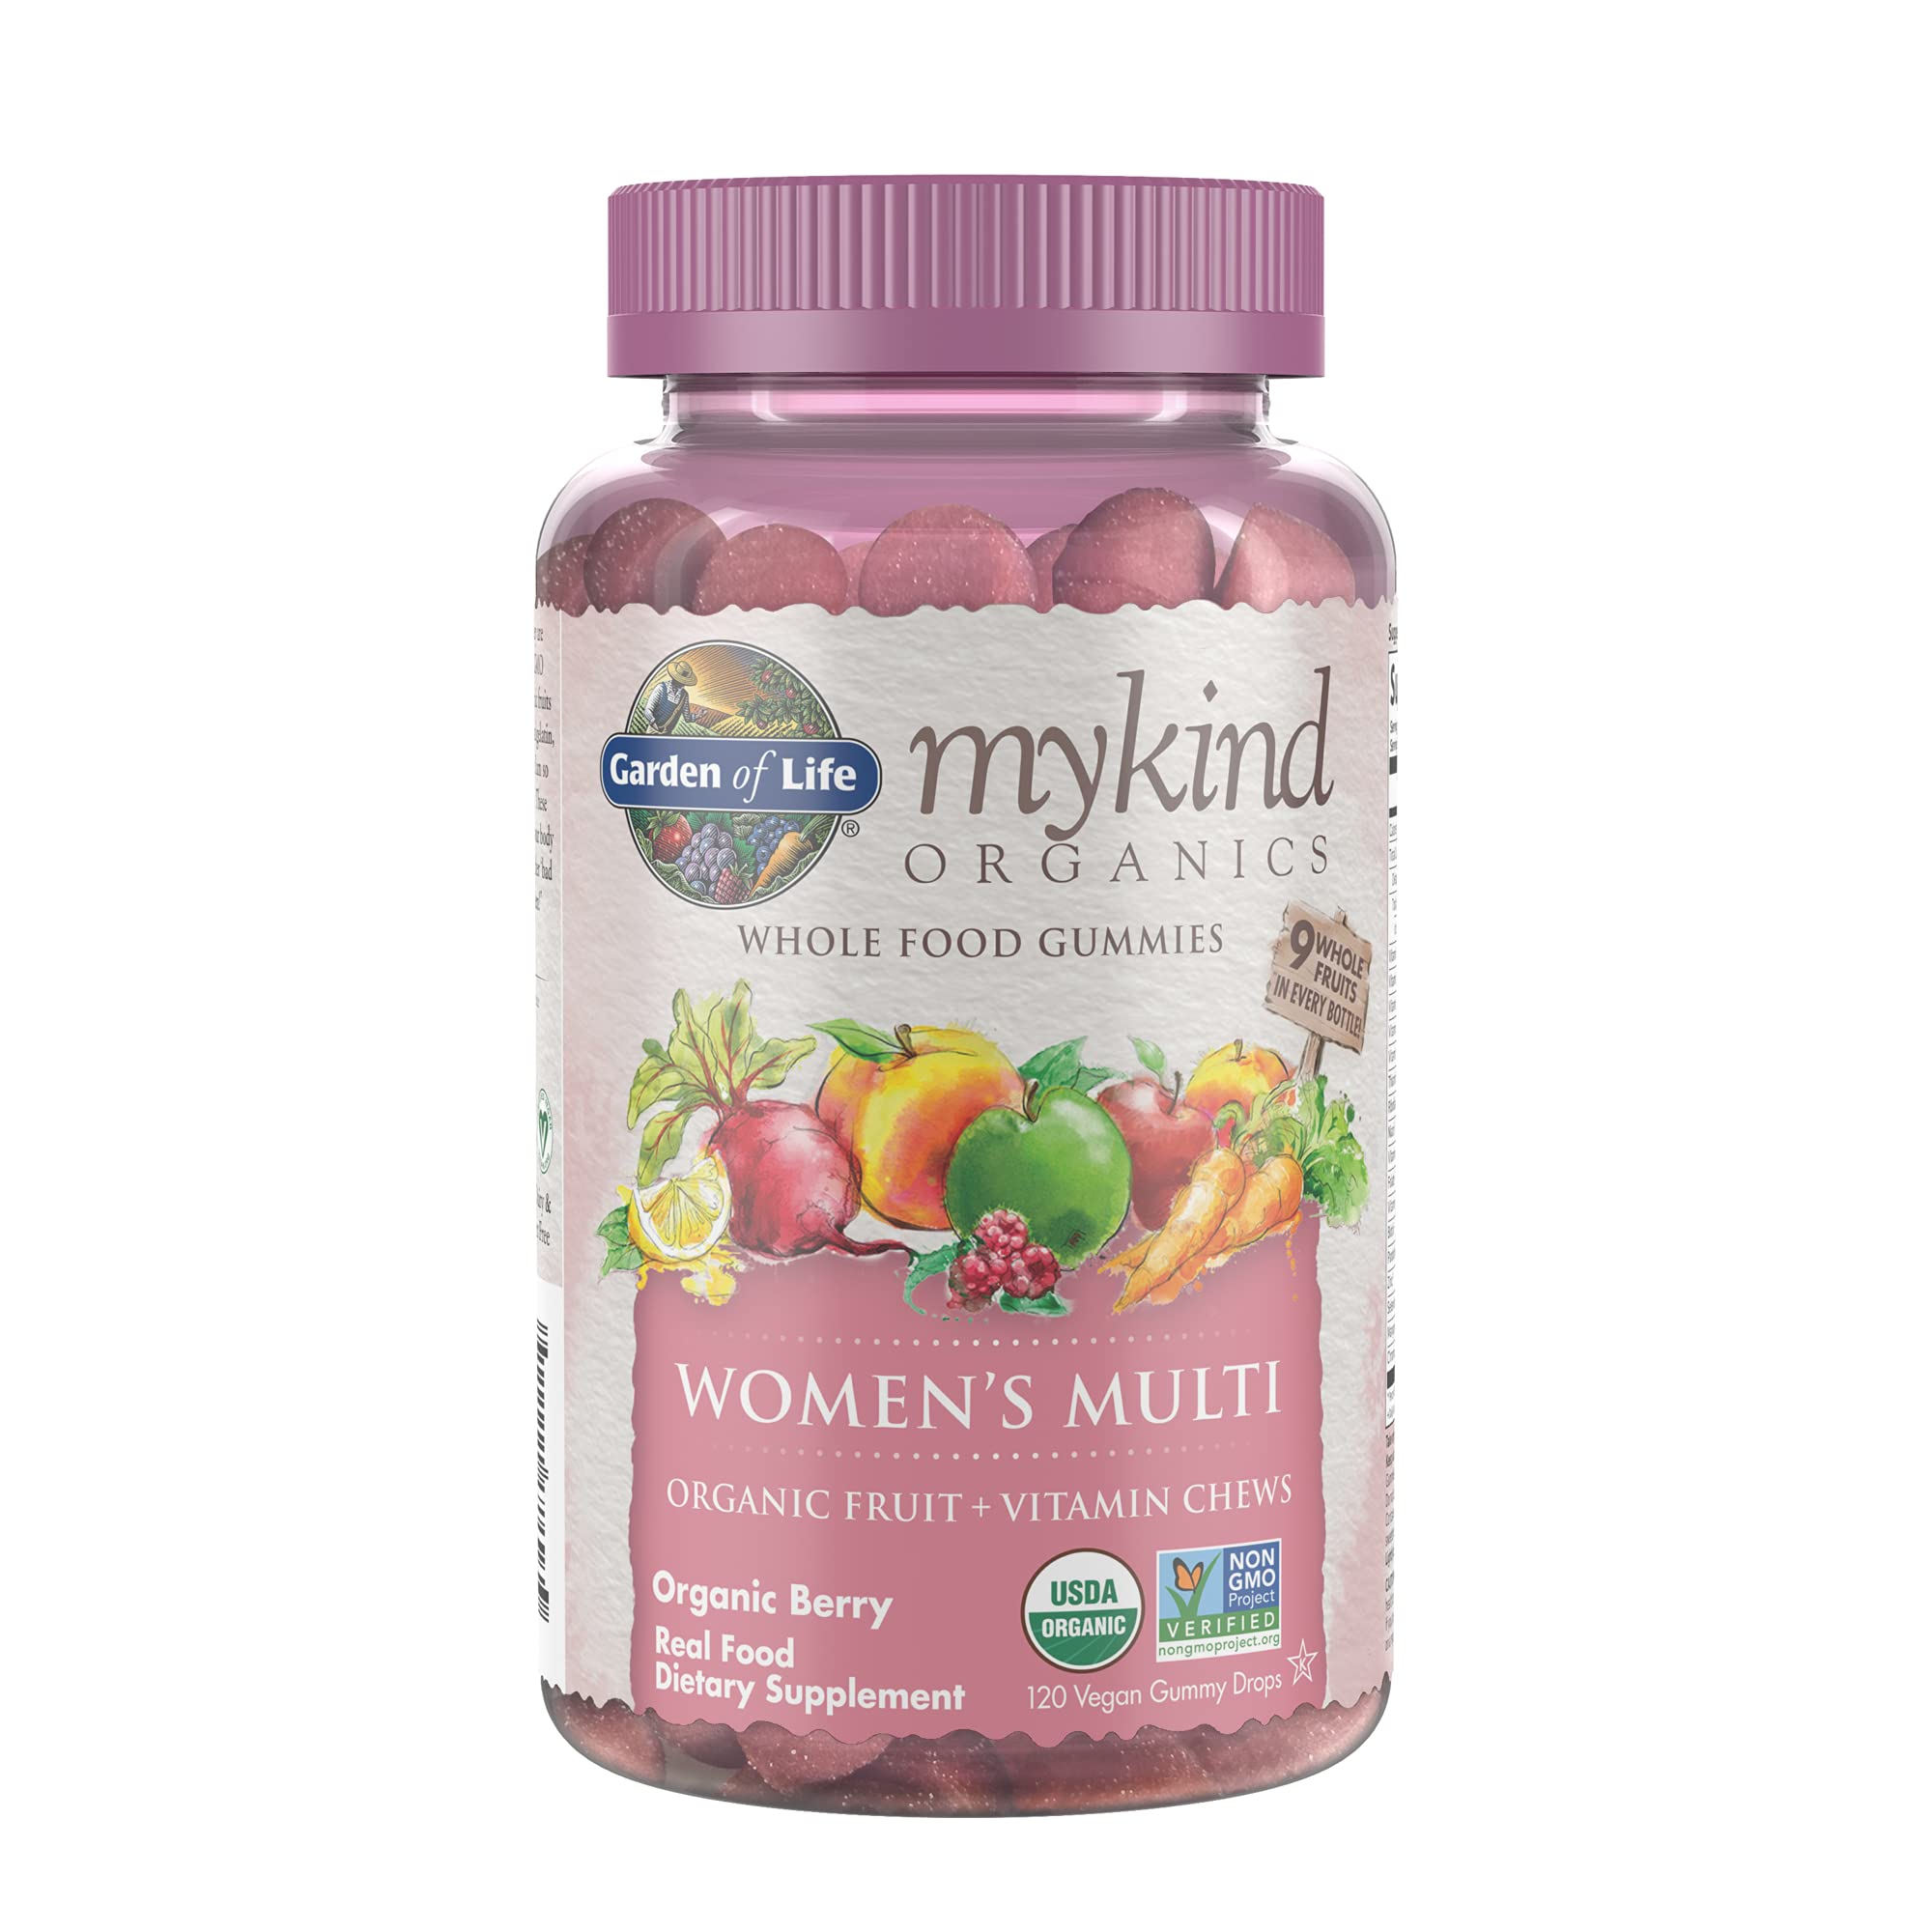 Garden of Life mykind Organics Women's Gummy Vitamins